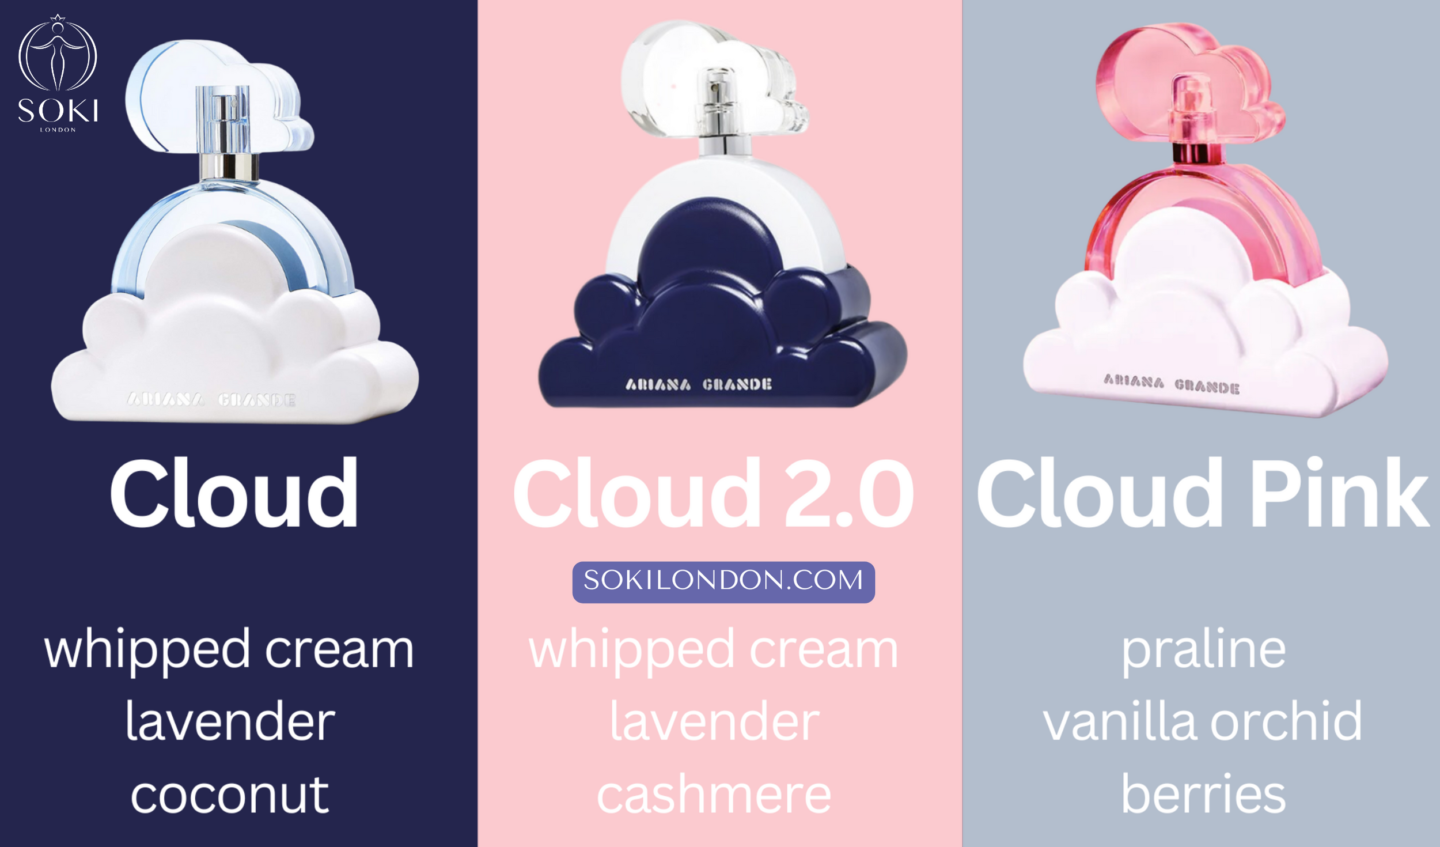 Ariana Grande Cloud กับ Cloud 2.0 กับ Cloud Pink-2